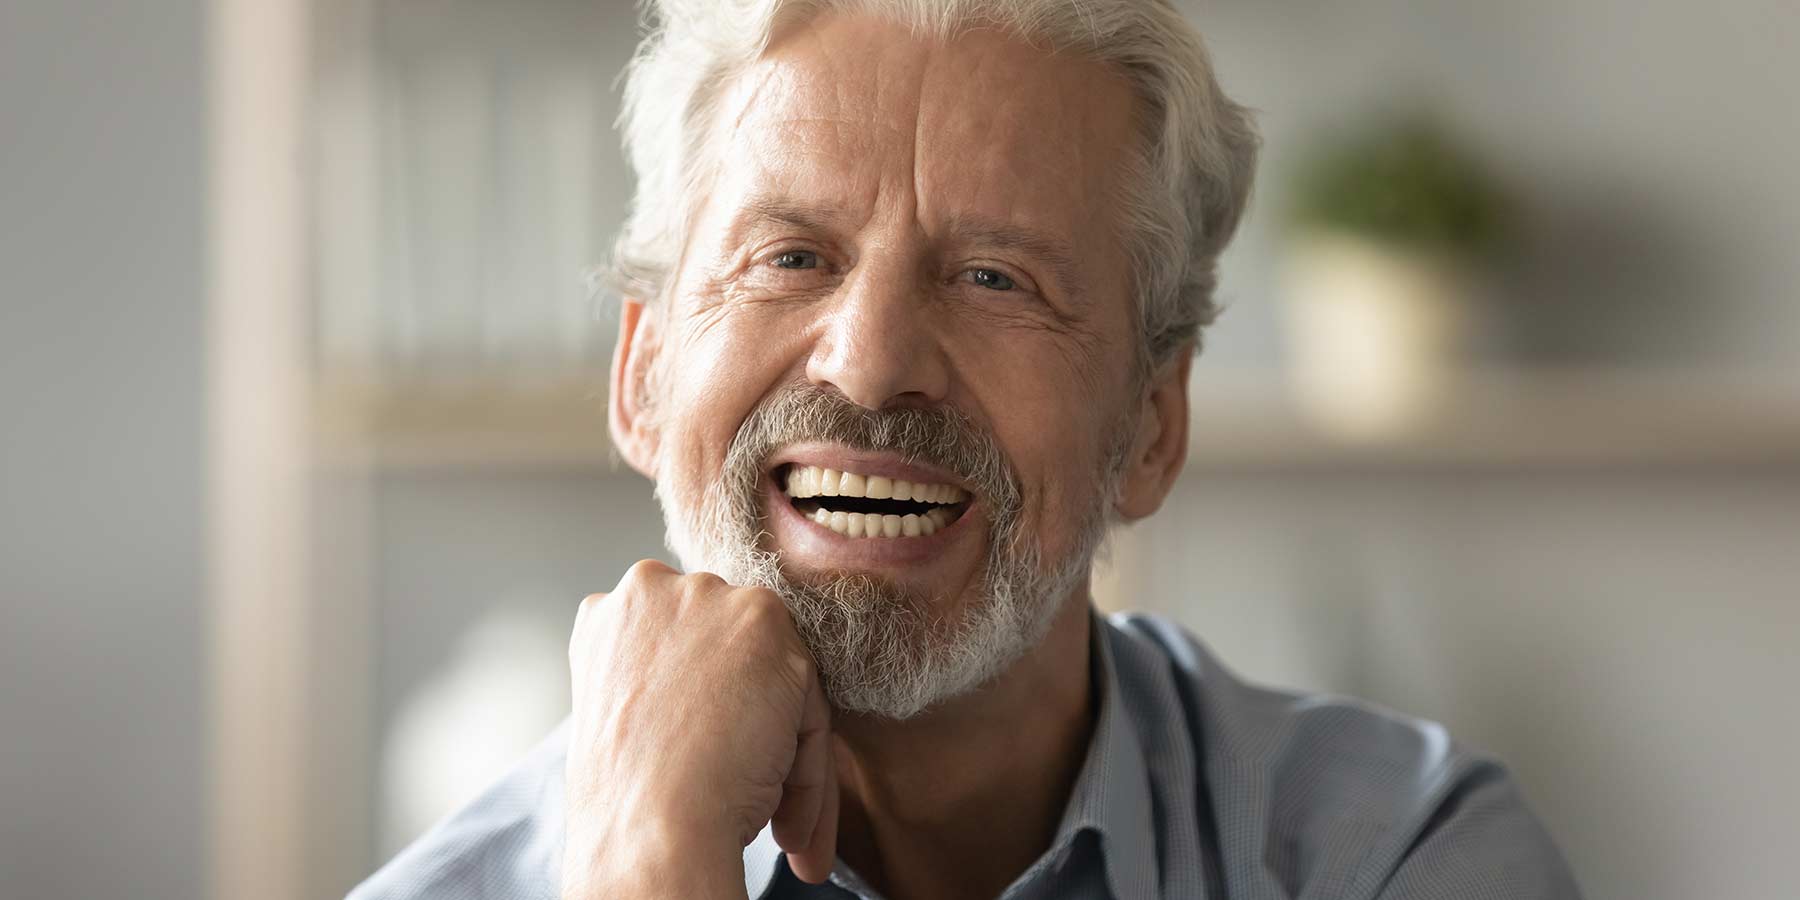 Dentures Senior Man